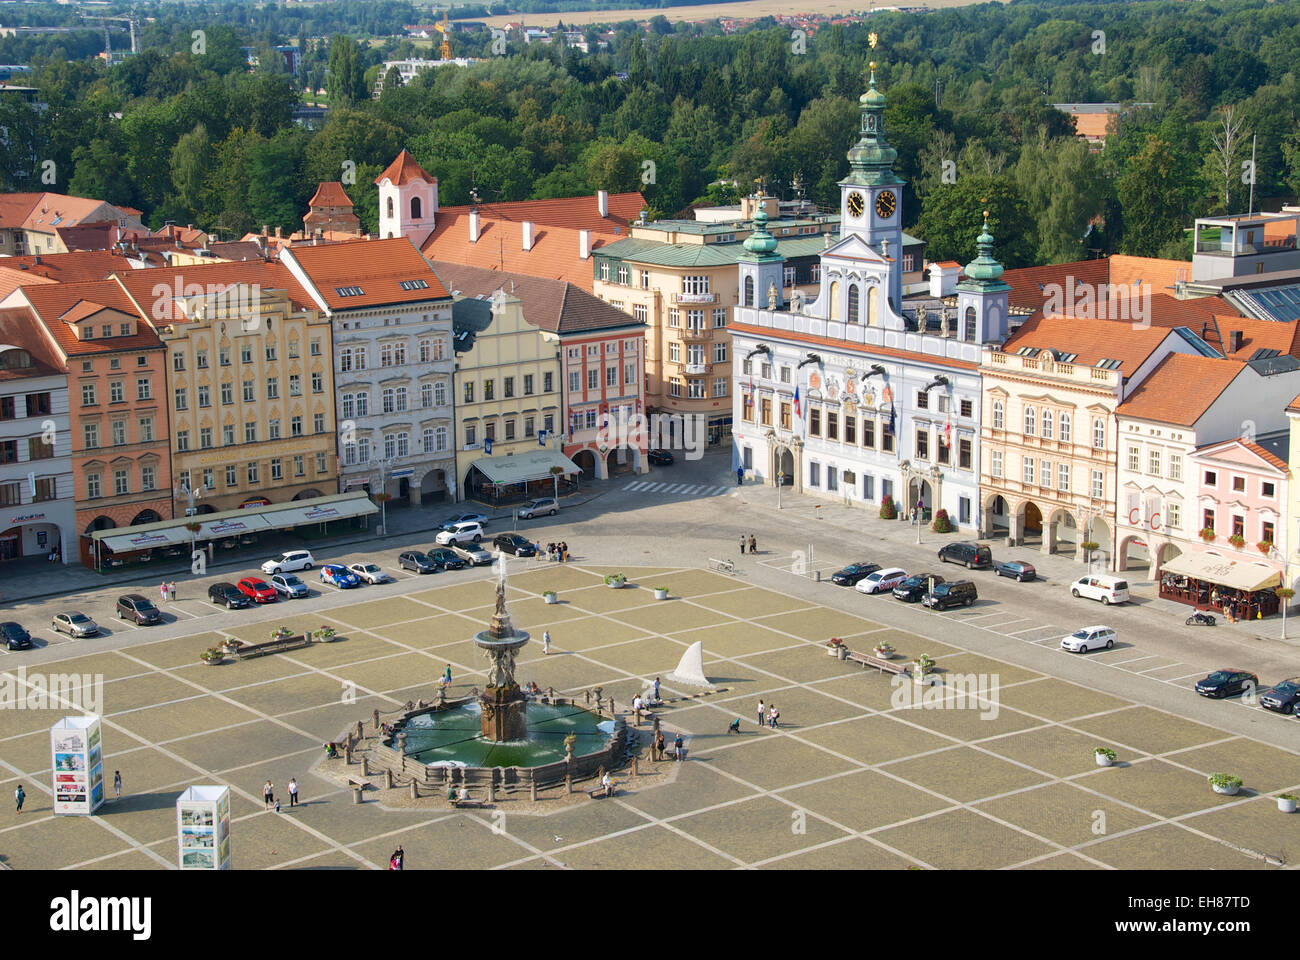 Premysla Otakar II Square, Namesti Premysla Otakar II, Budweis, České Budějovice, Czech Republic Stock Photo